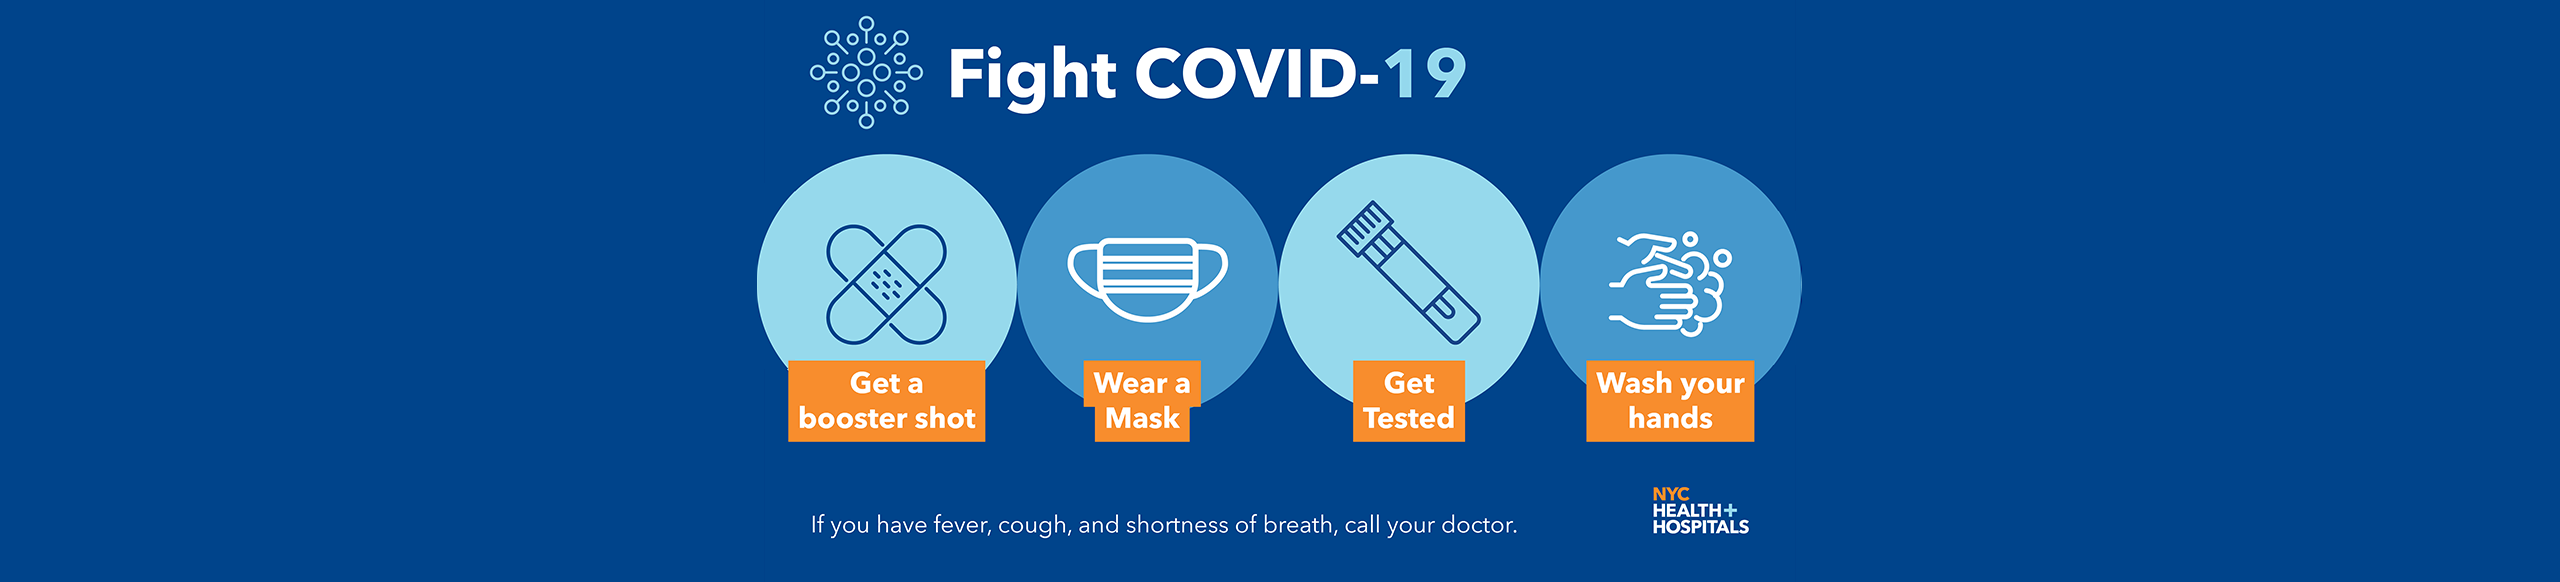 COVID-19 Prevention Tips 